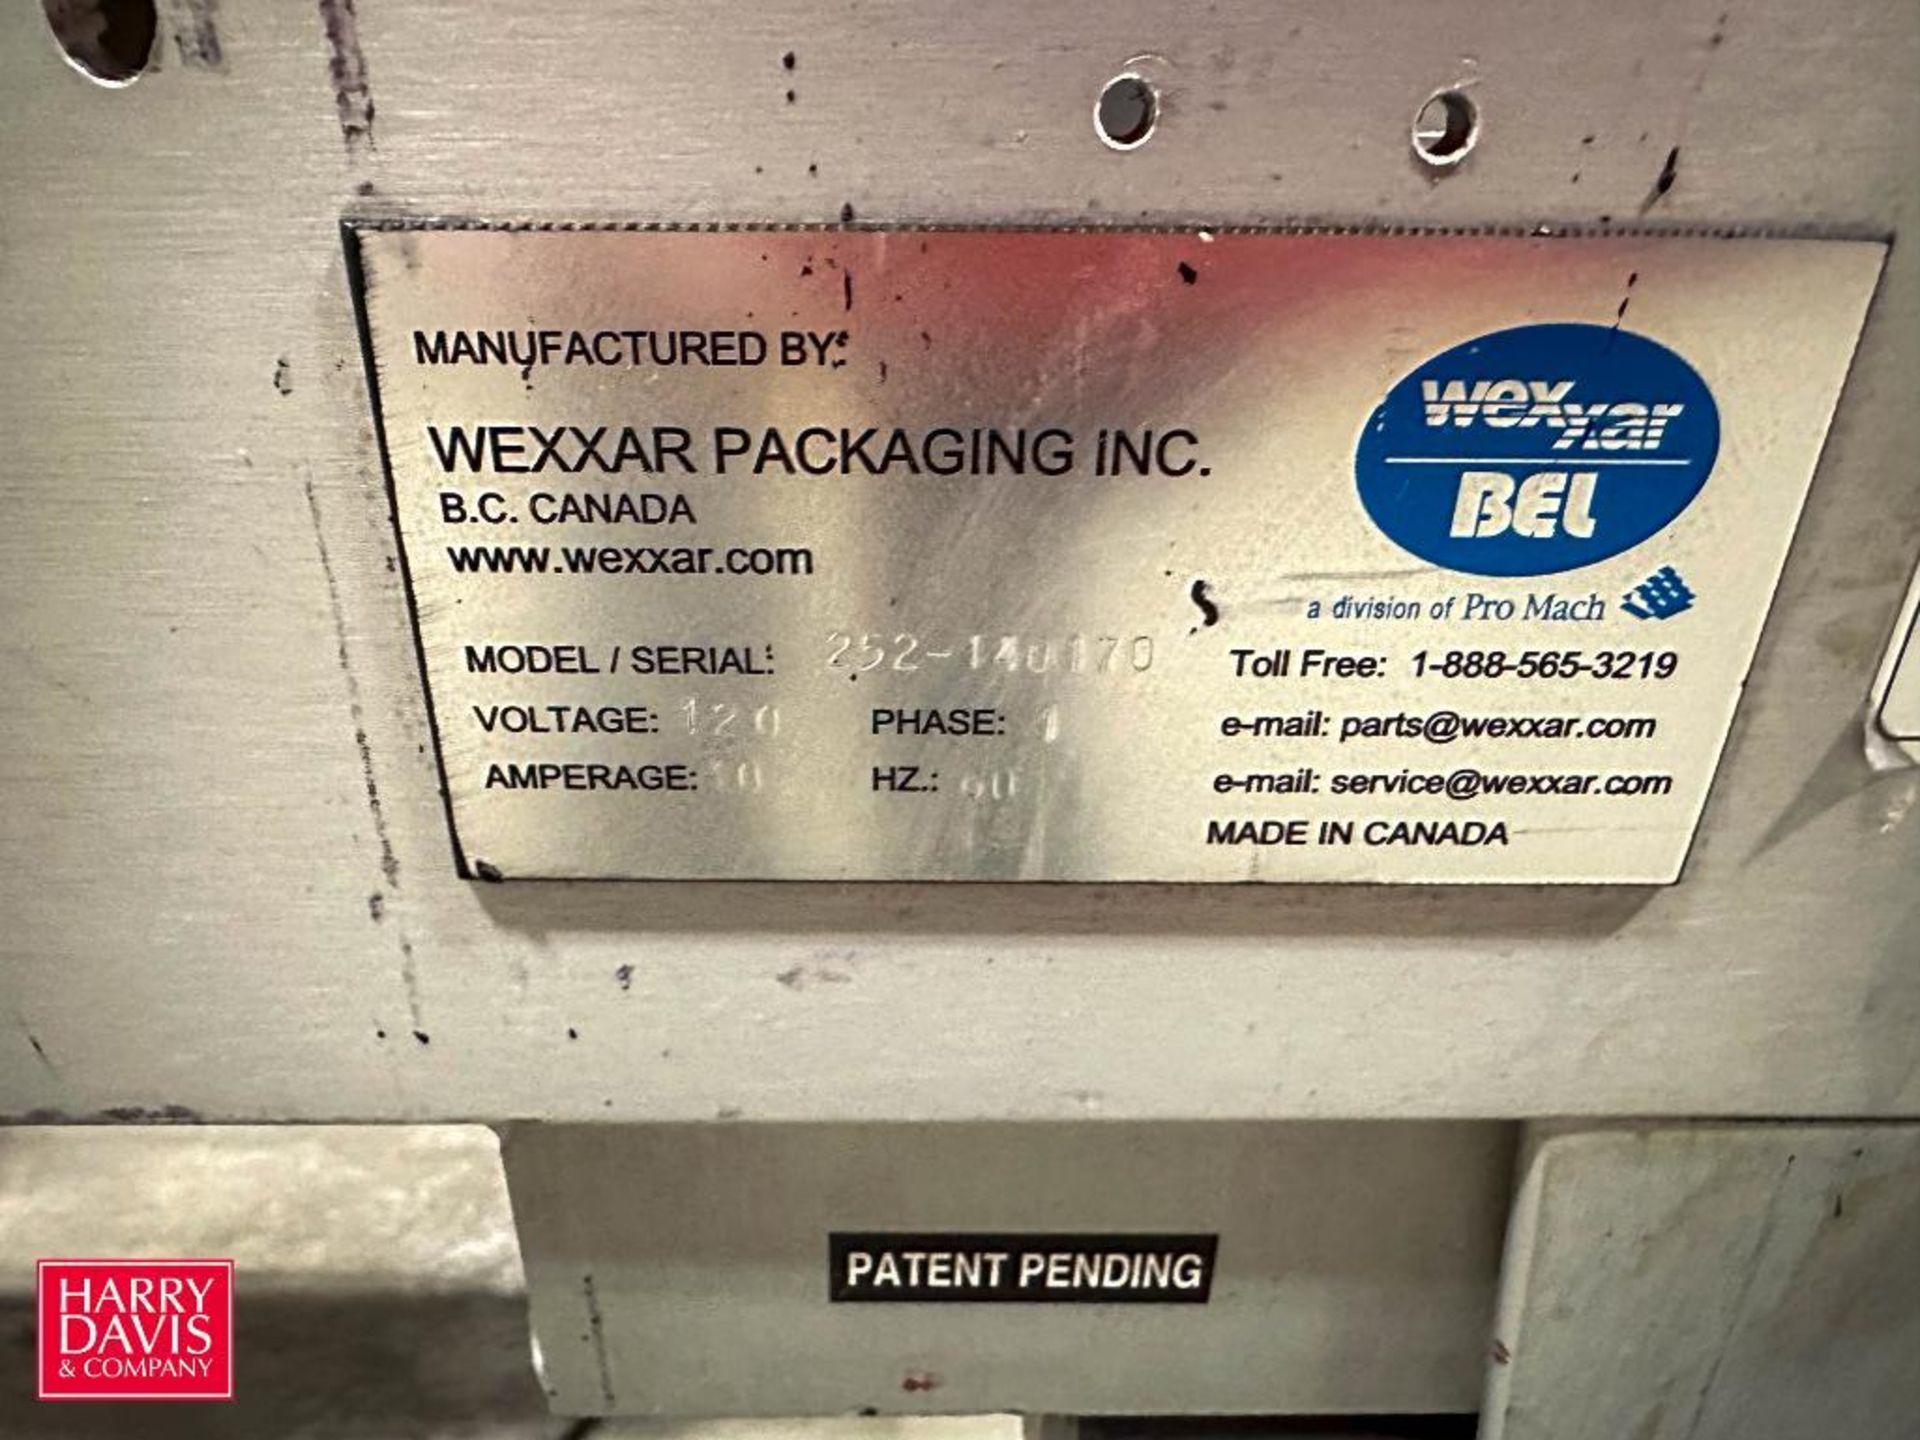 WEXXAR BEL Top and Bottom Case Sealer, Model: 252, S/N: 140170 - Rigging Fee: $100 - Image 2 of 2